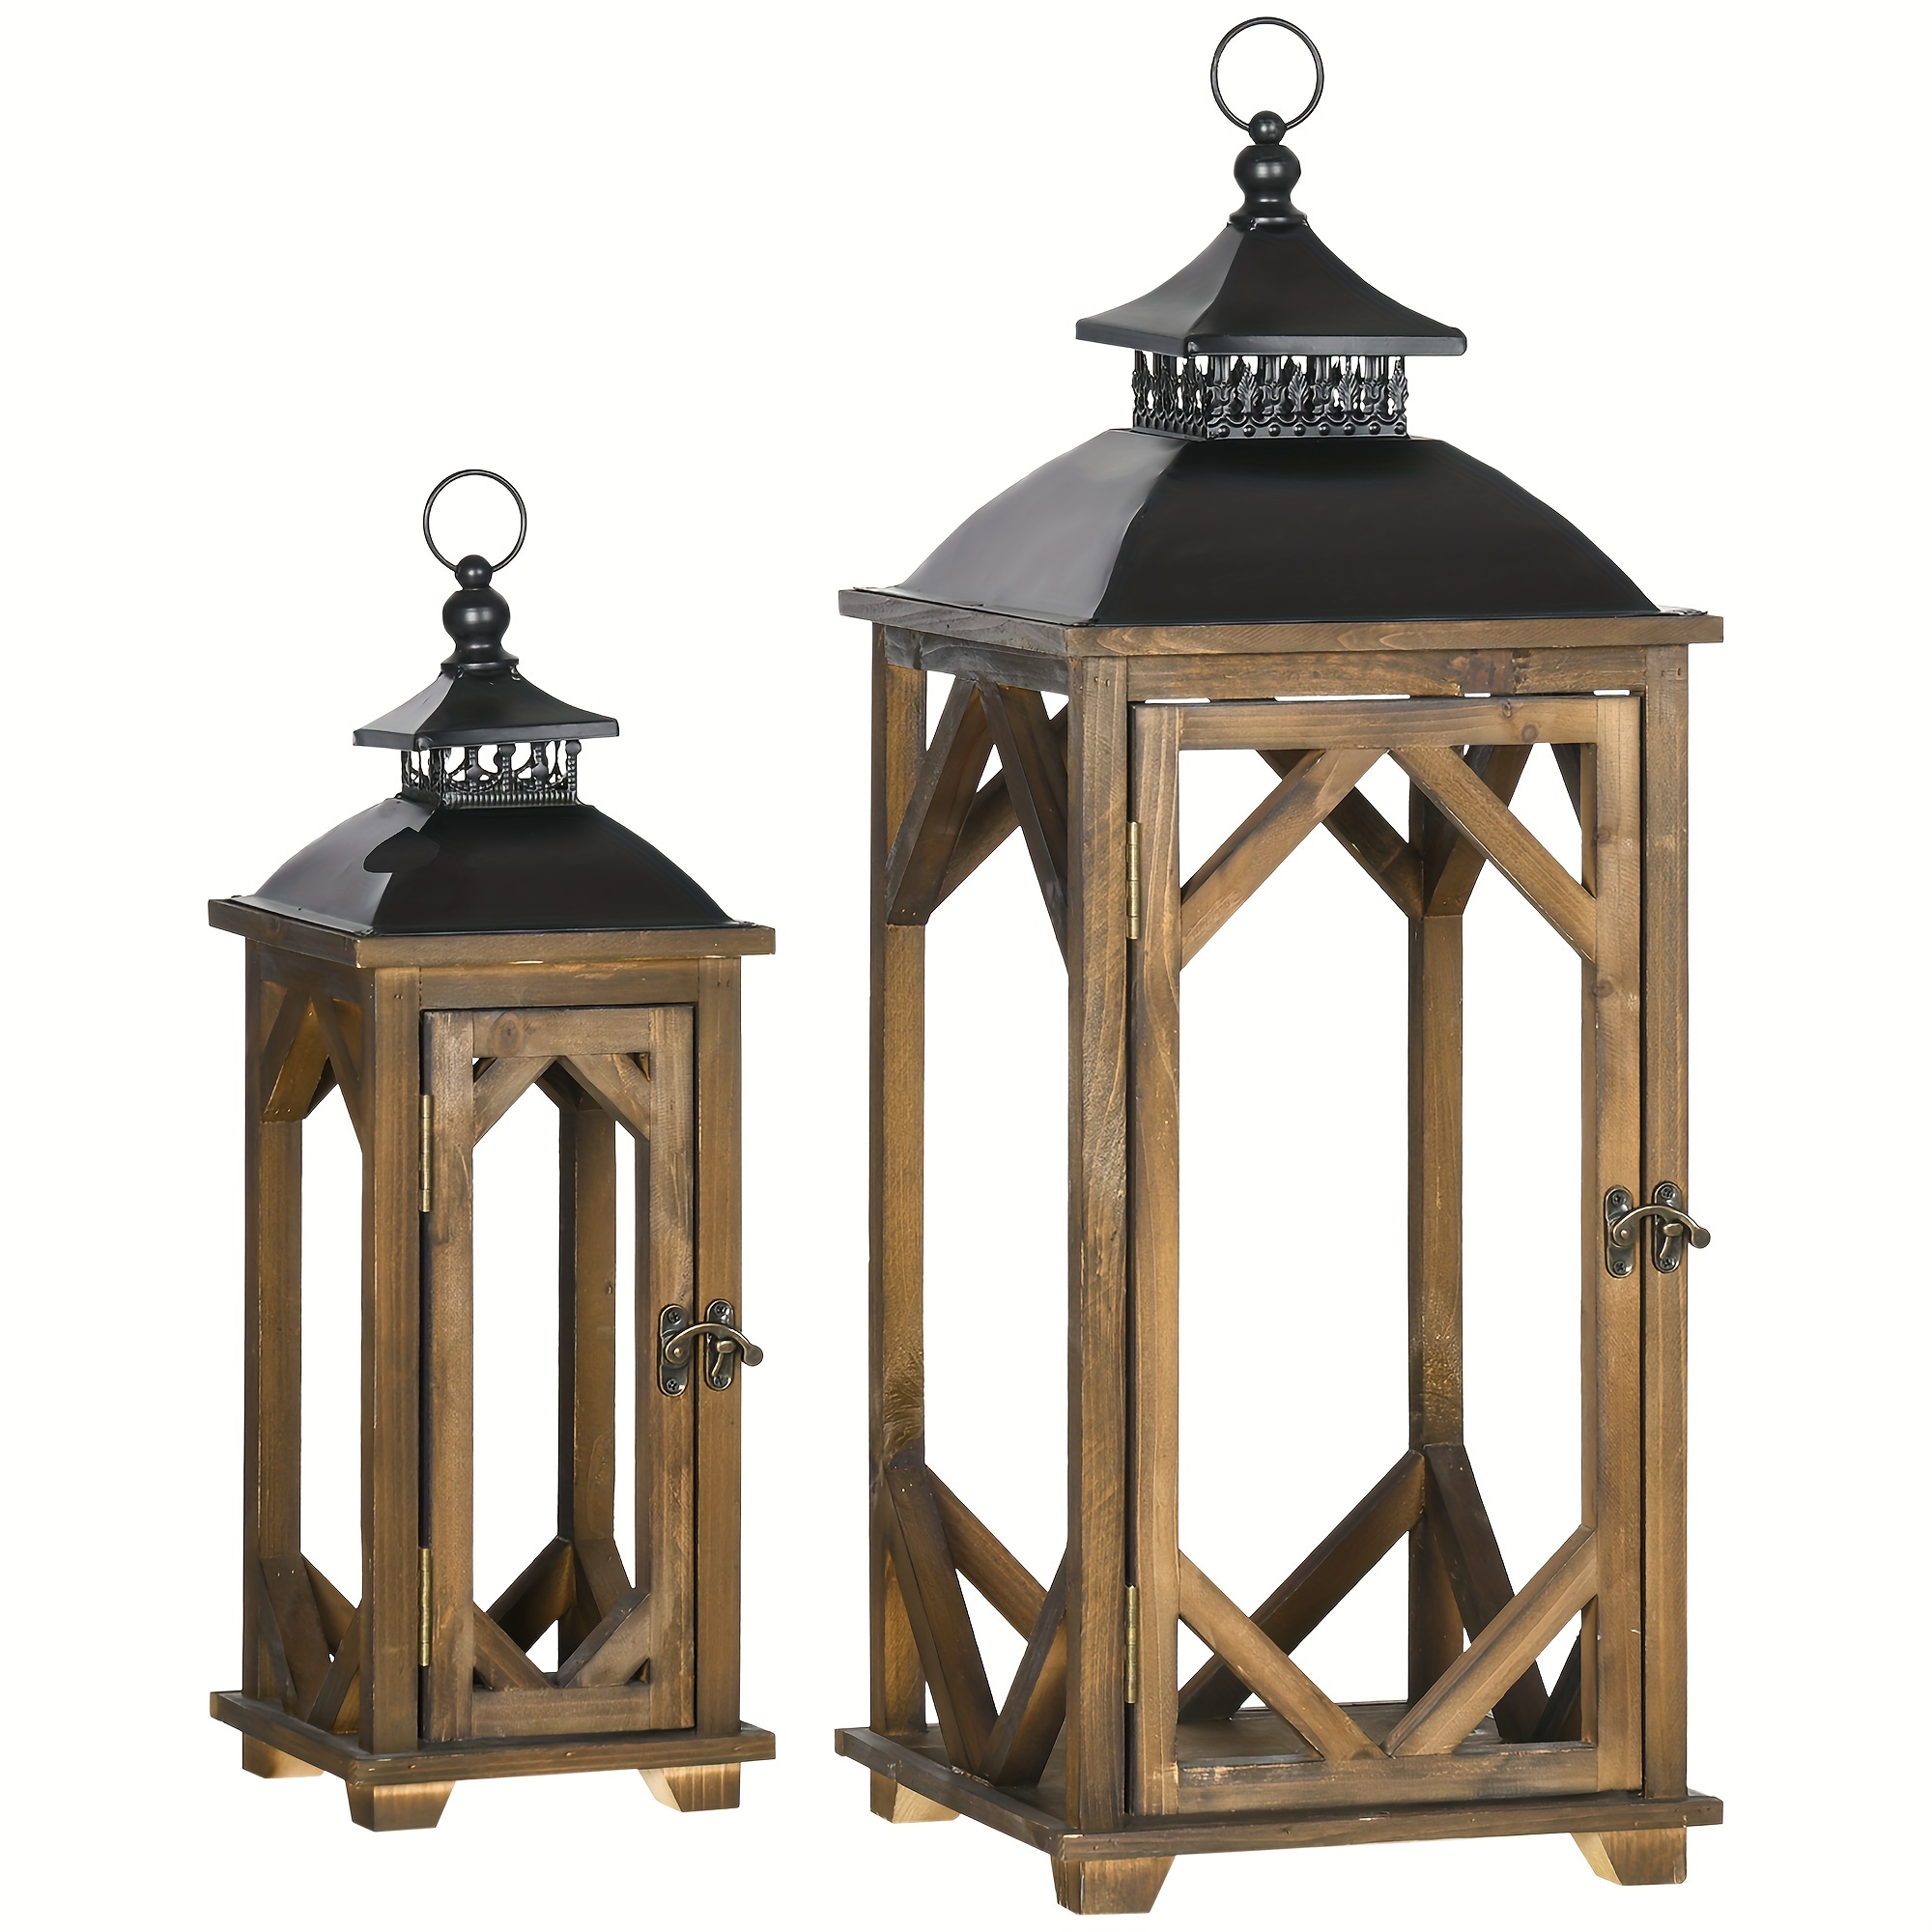 

Homcom 2 Pack 31"/21" Large Rustic Lantern Decorations, Hanging Wooden Metal Indoor Lantern For Home Decor (no Glass), Black And Dark Wood Color